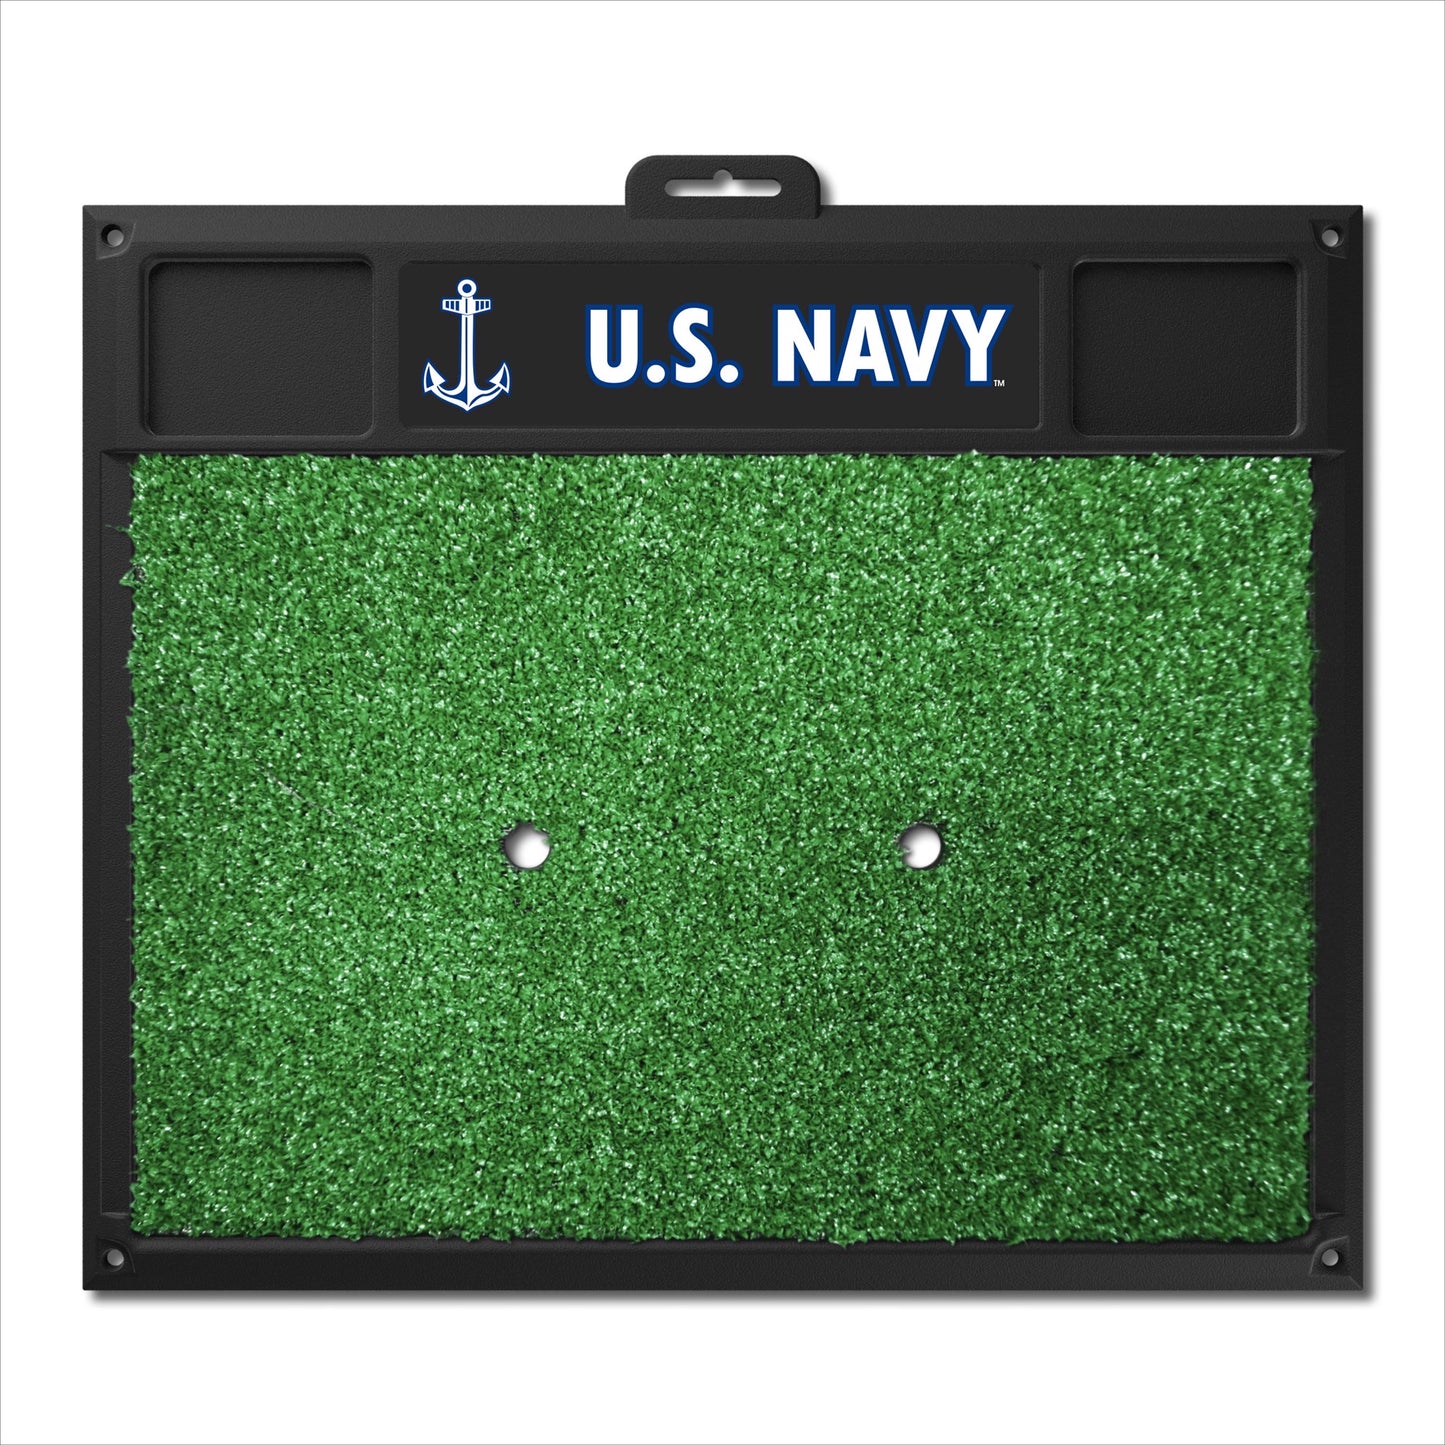 U.S. Navy  Golf Hitting Mat by Fanmats